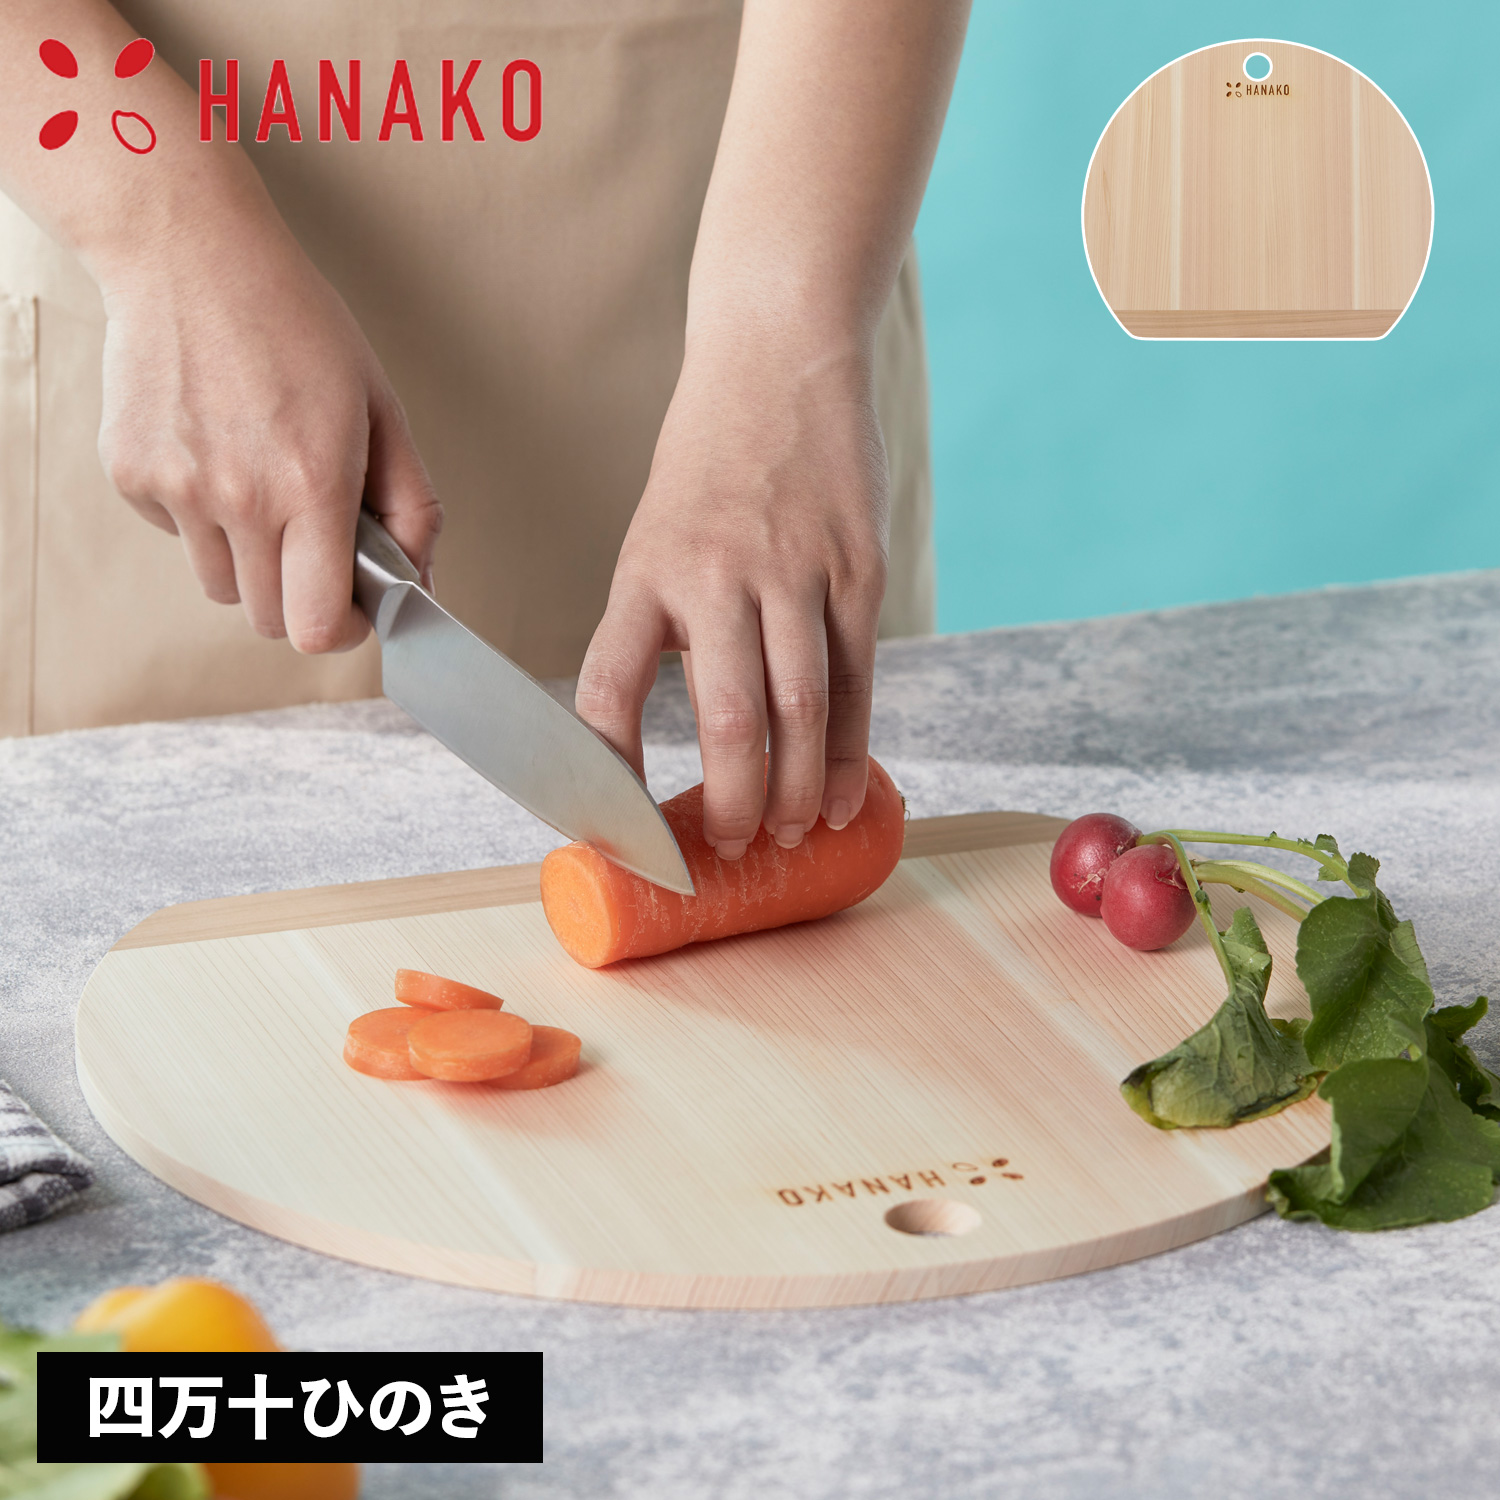 HANAKO ハナコ まな板 カッティングボード 丸 木製 四万十ひのきまな板 日本製 ベージュ HNK-MD